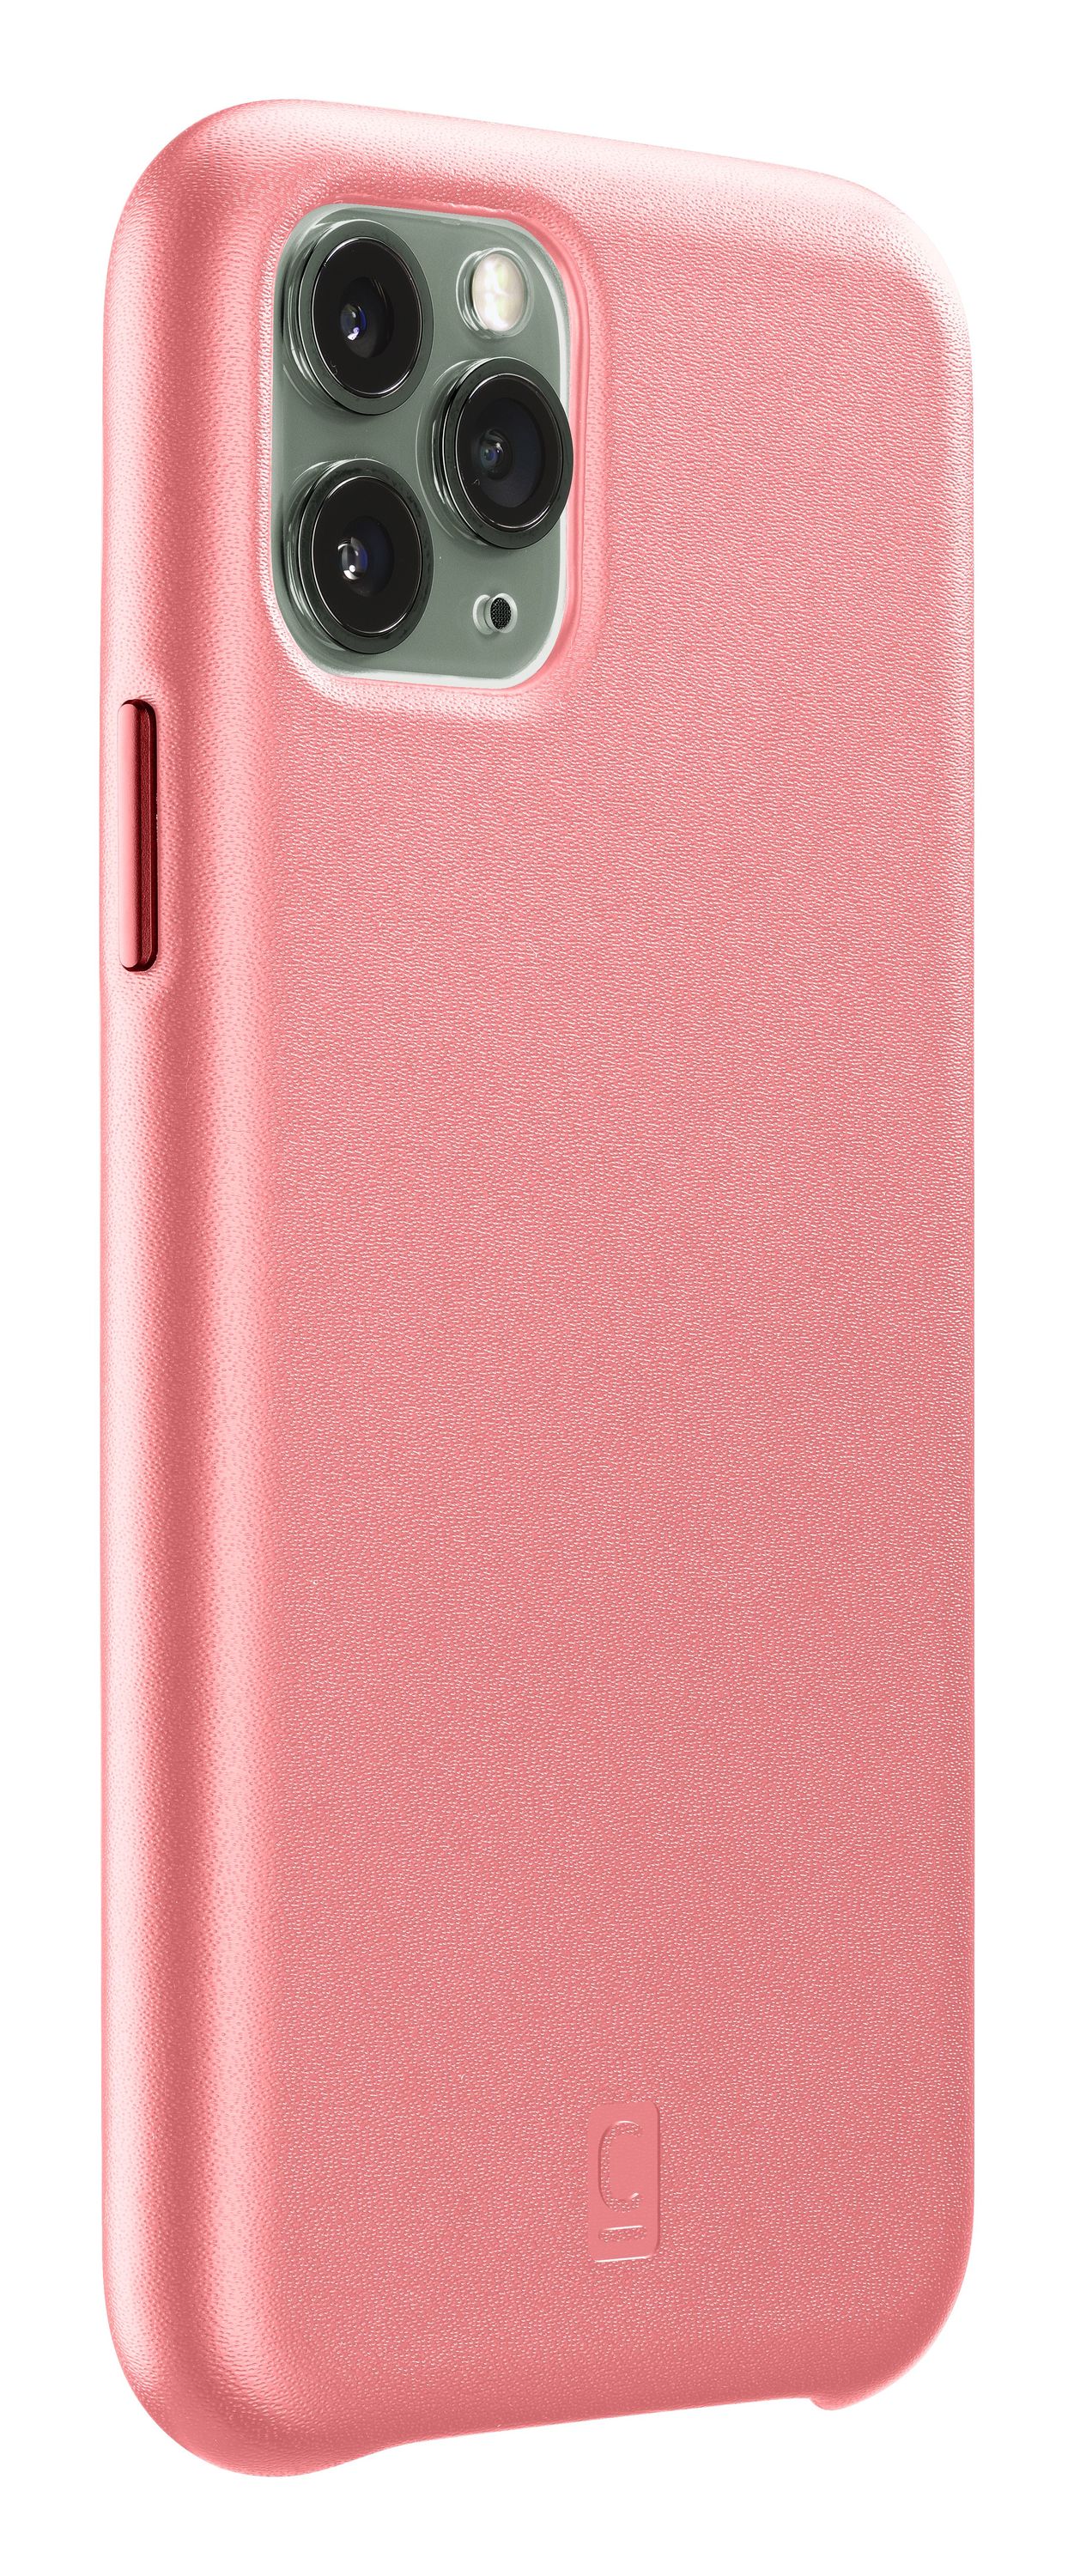 iPhone 11 Pro Max, case Elite, pink